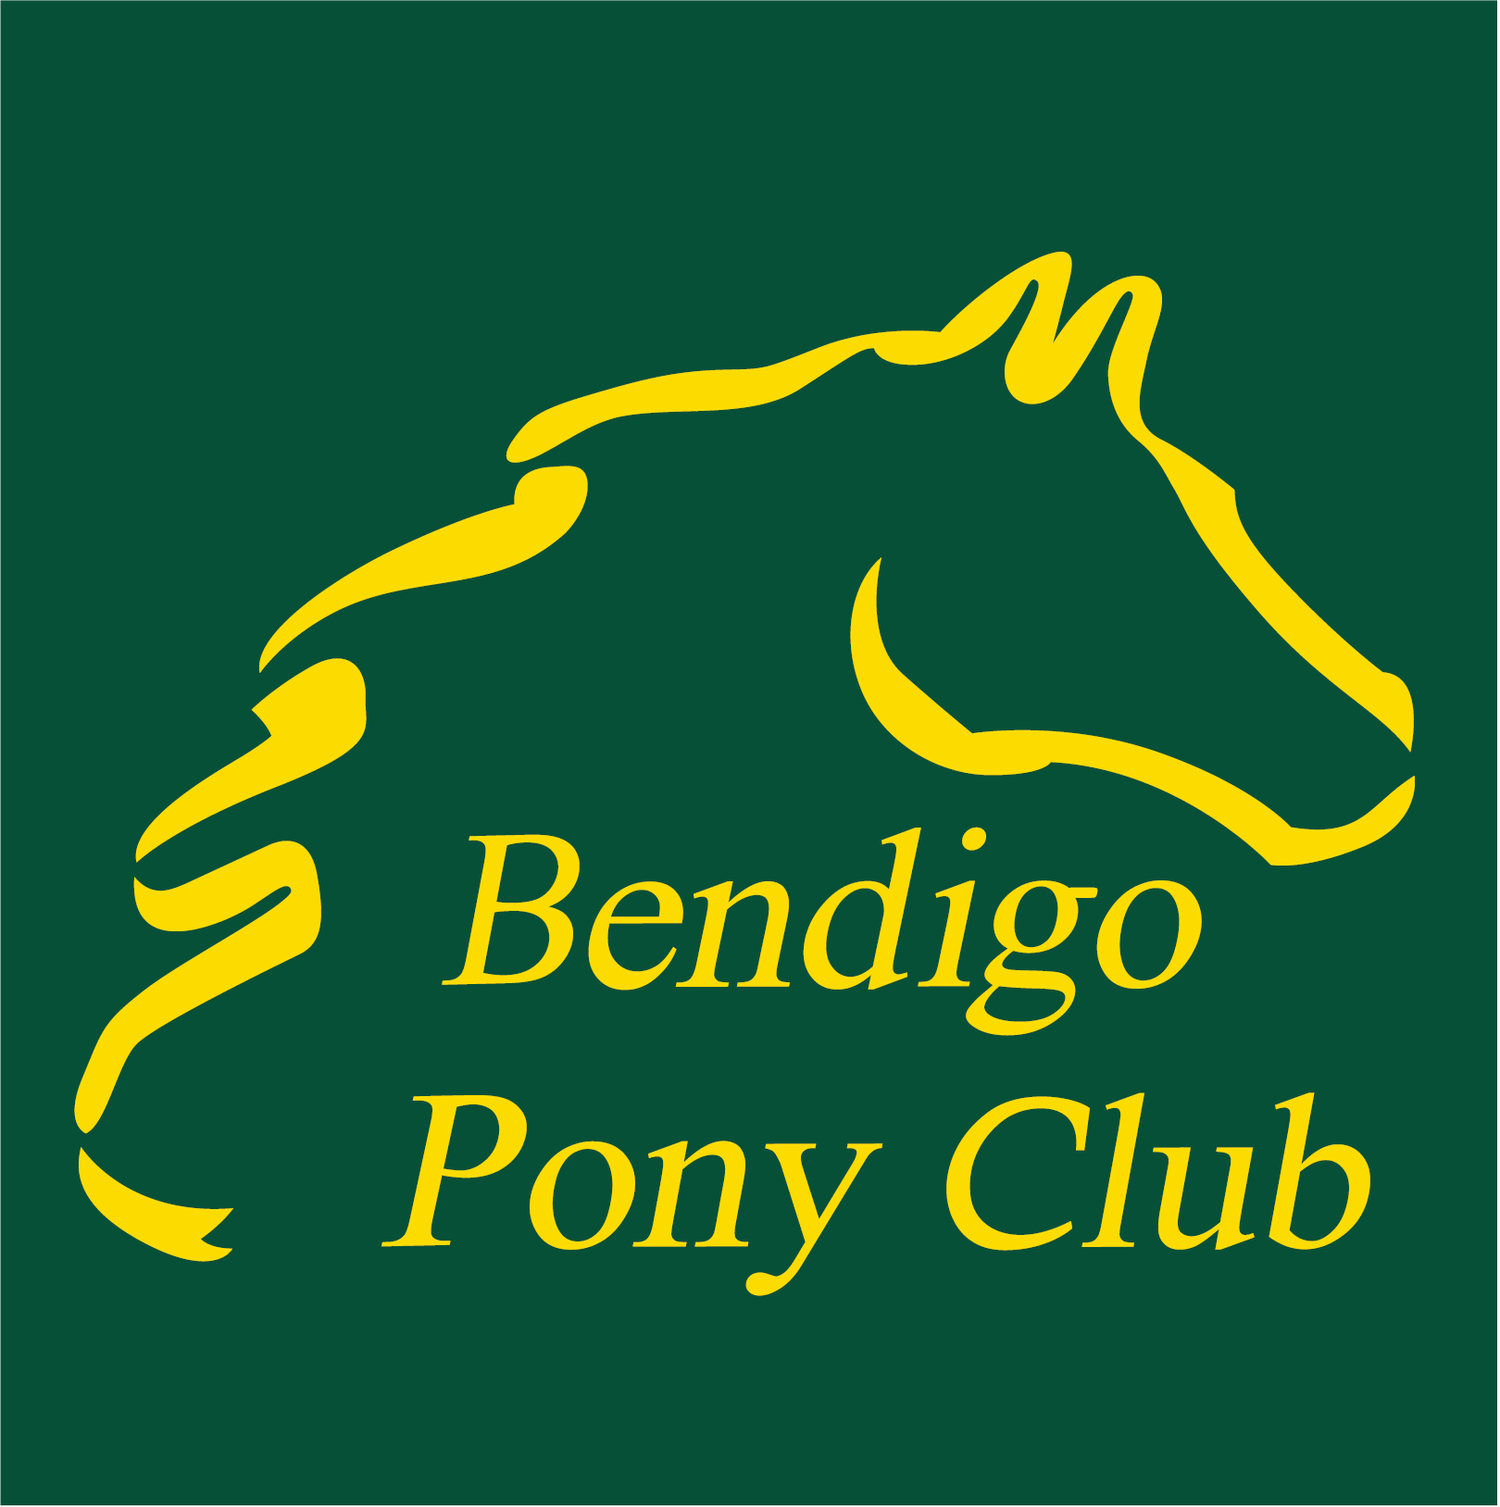 Bendigo Pony Club